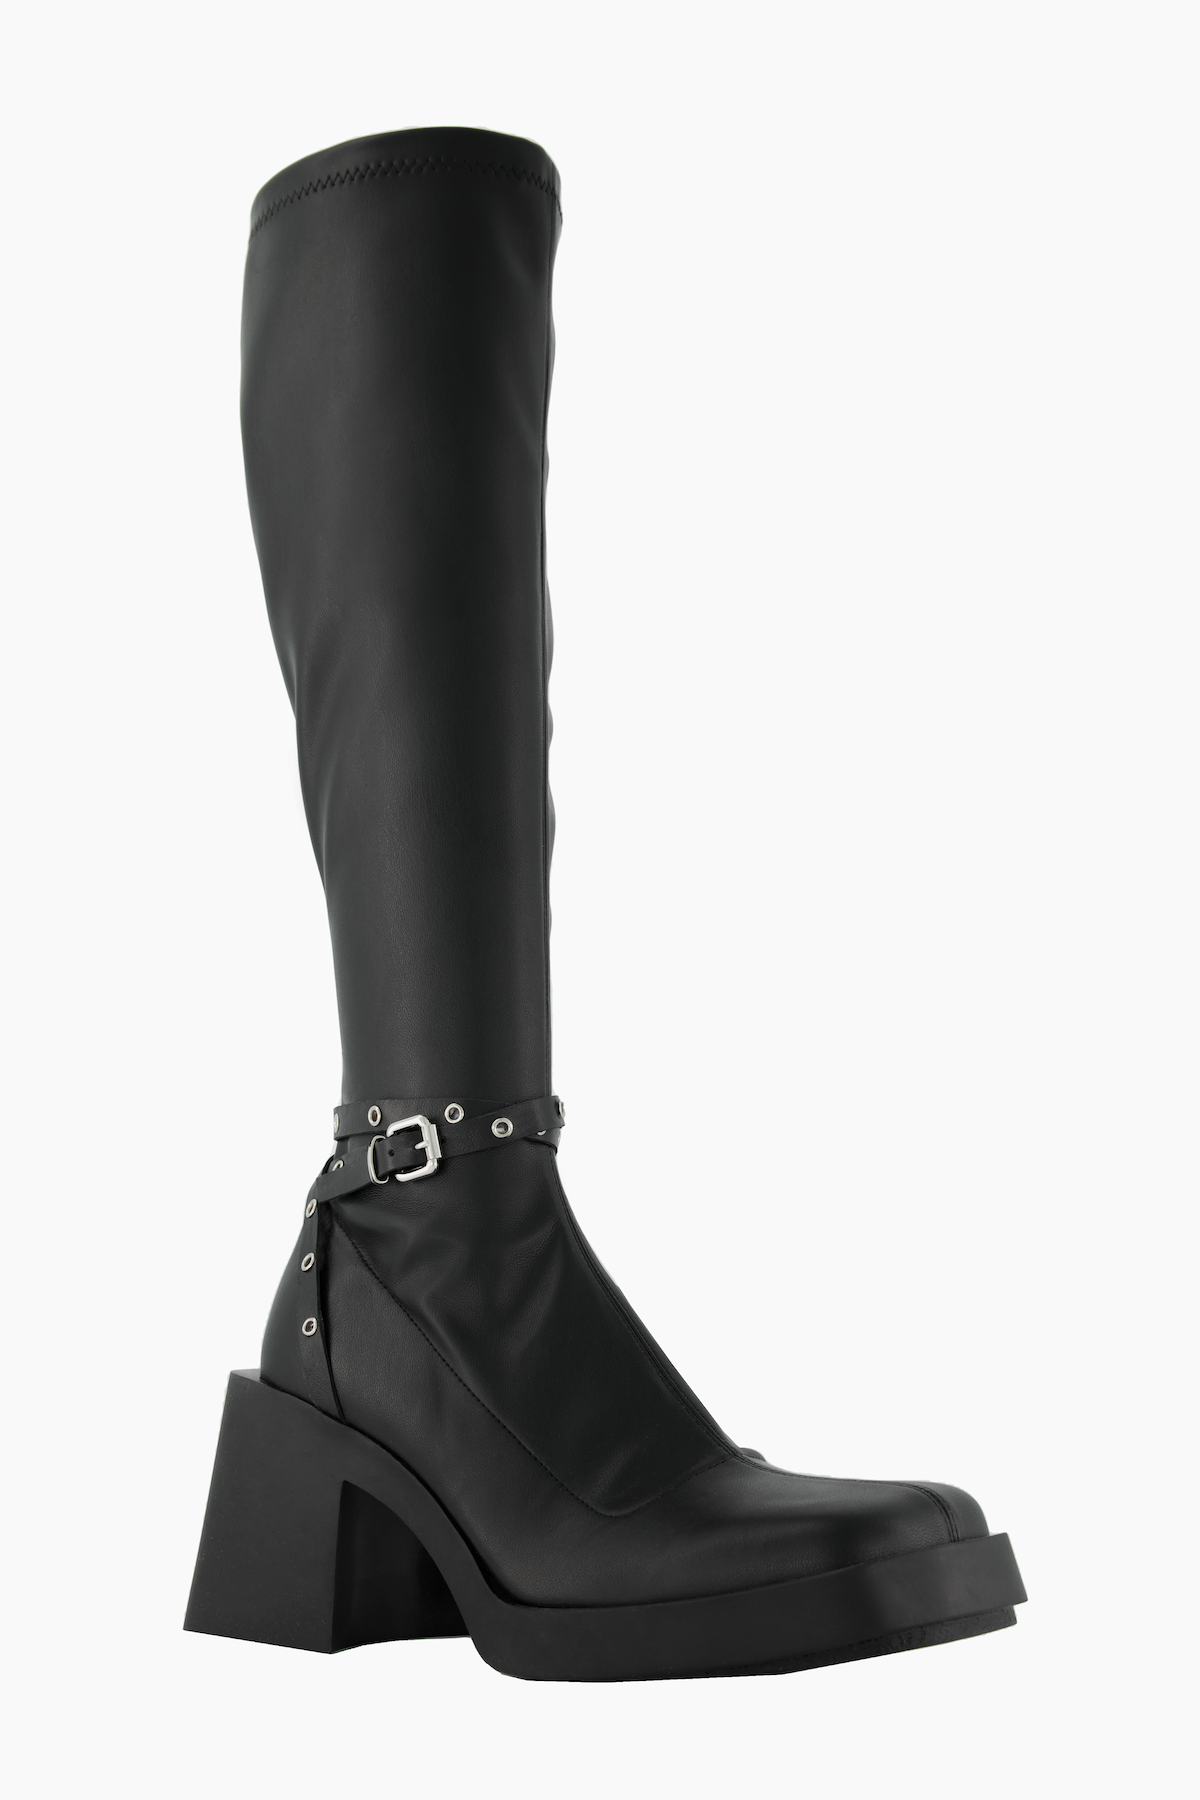 Chloë strap black high boots